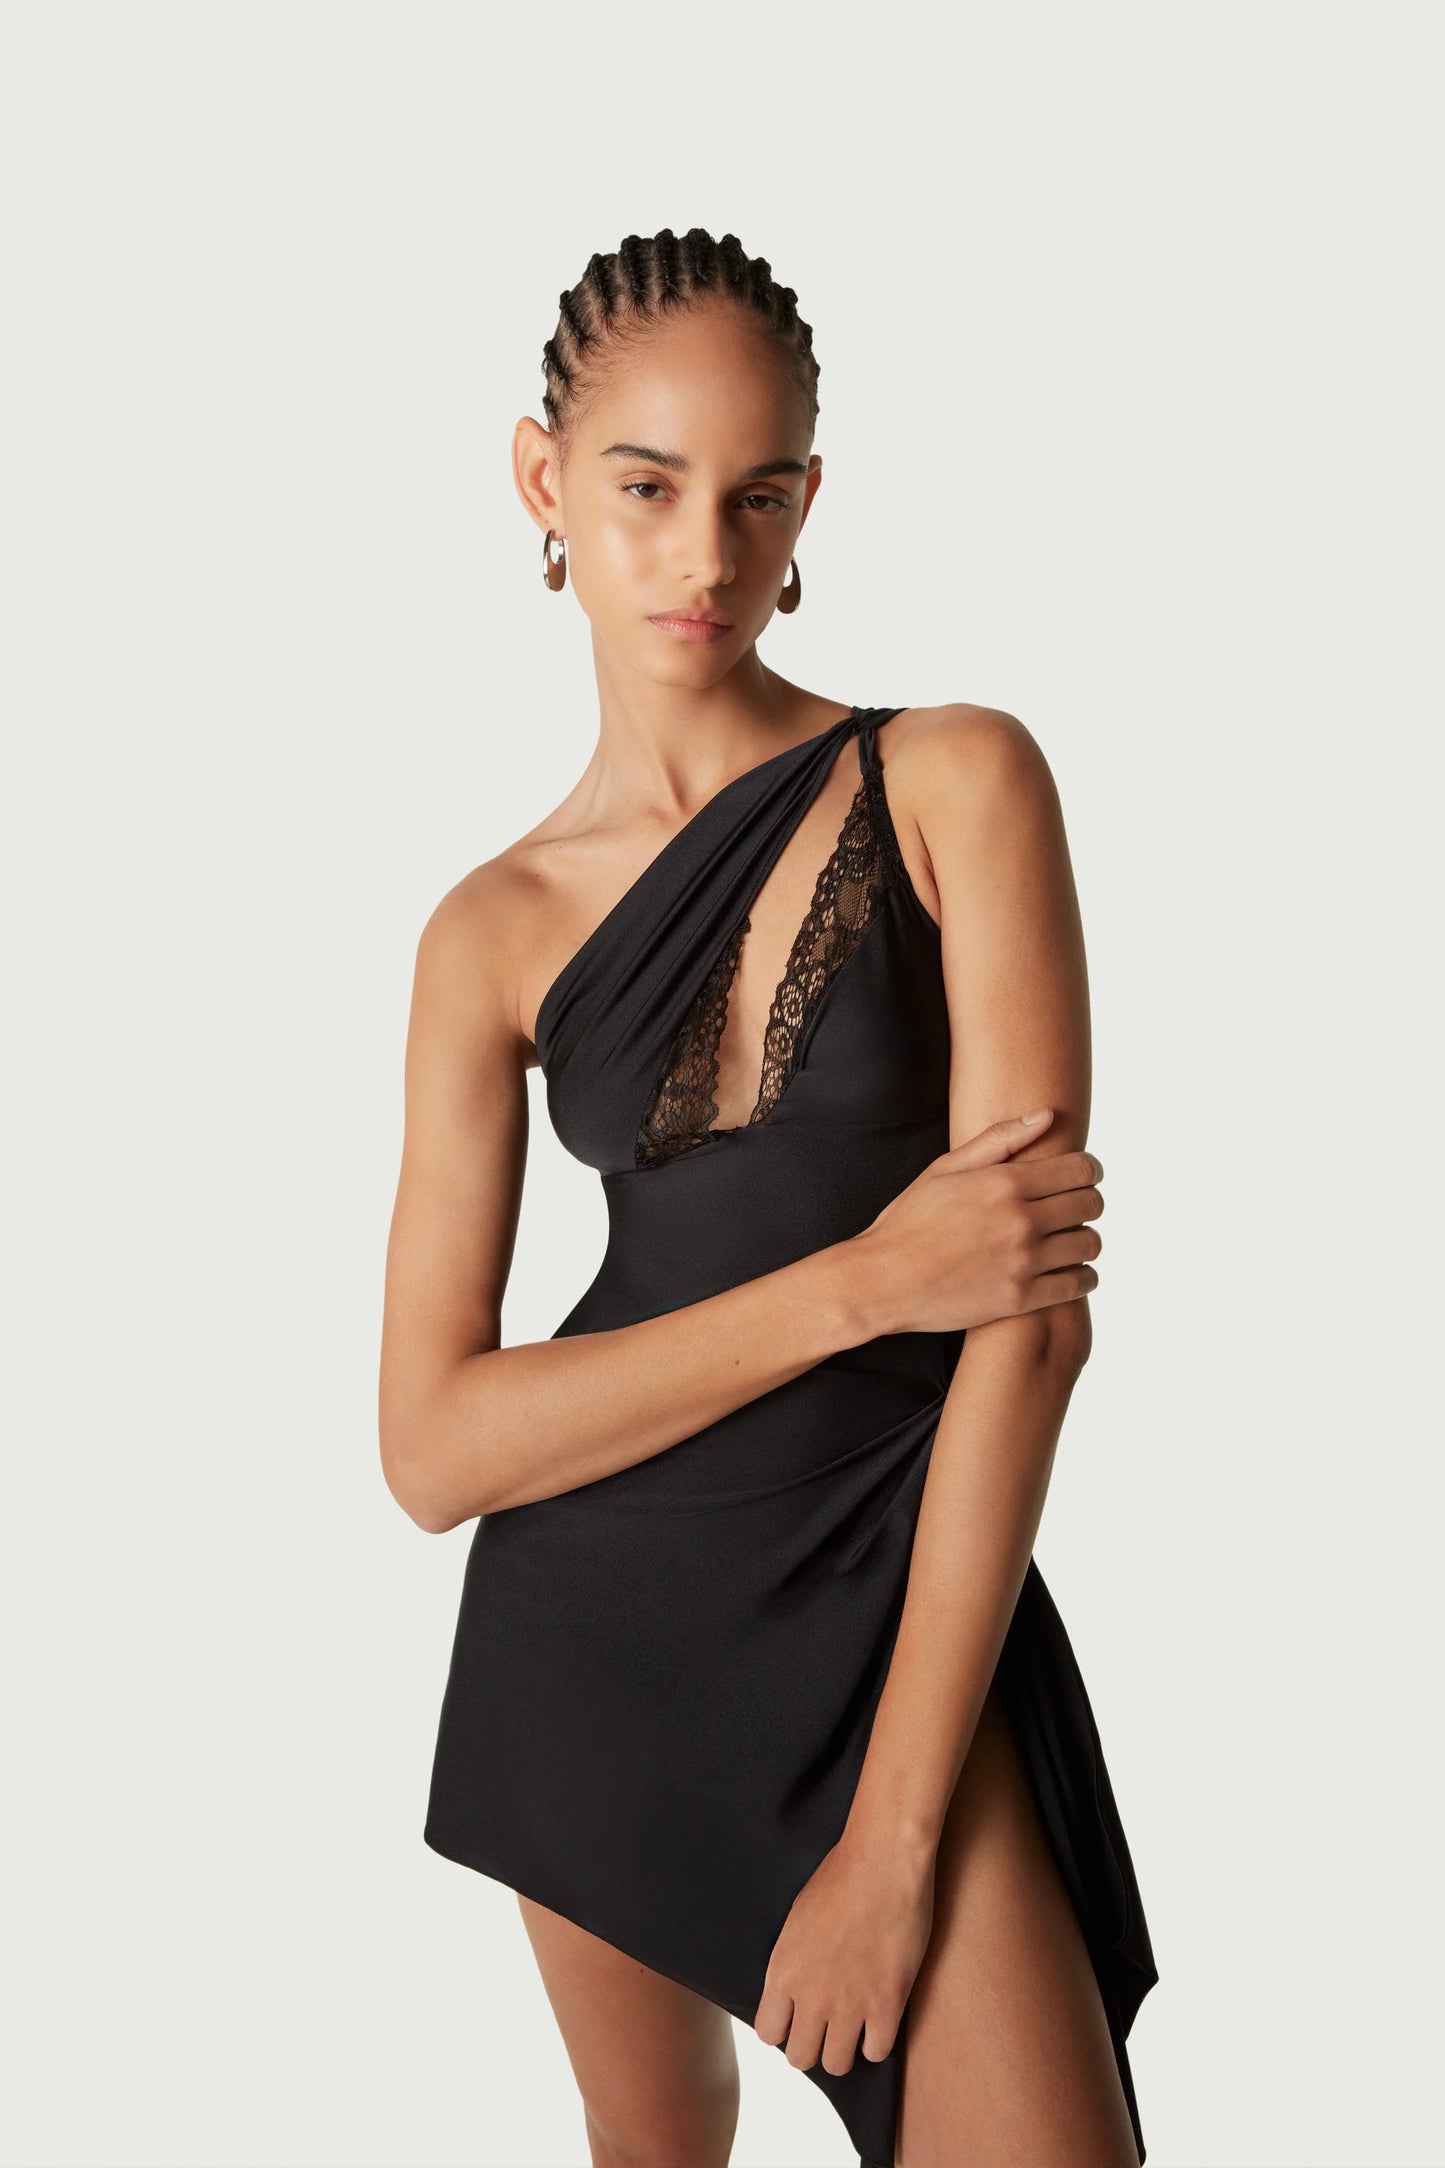 Asymmetric Mini Dress - Black